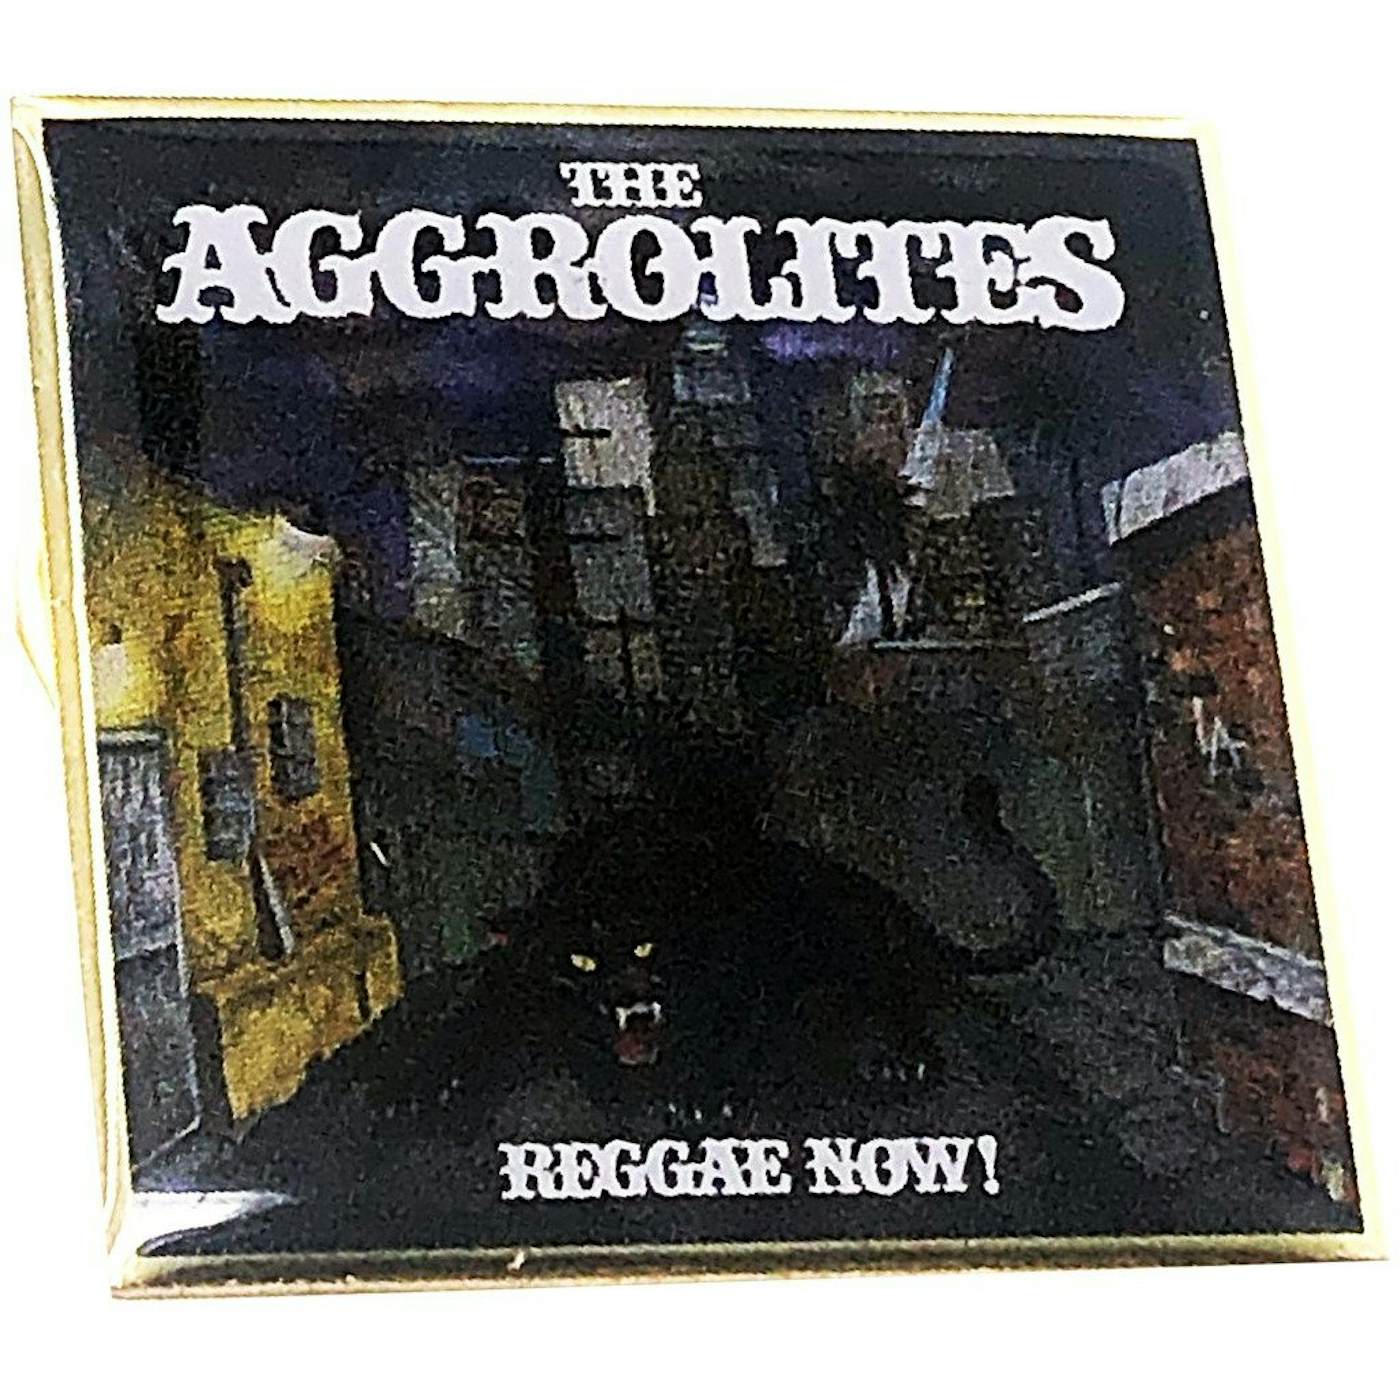 The Aggrolites - Reggae Now! Album Cover - 1.25" Enamel Pin